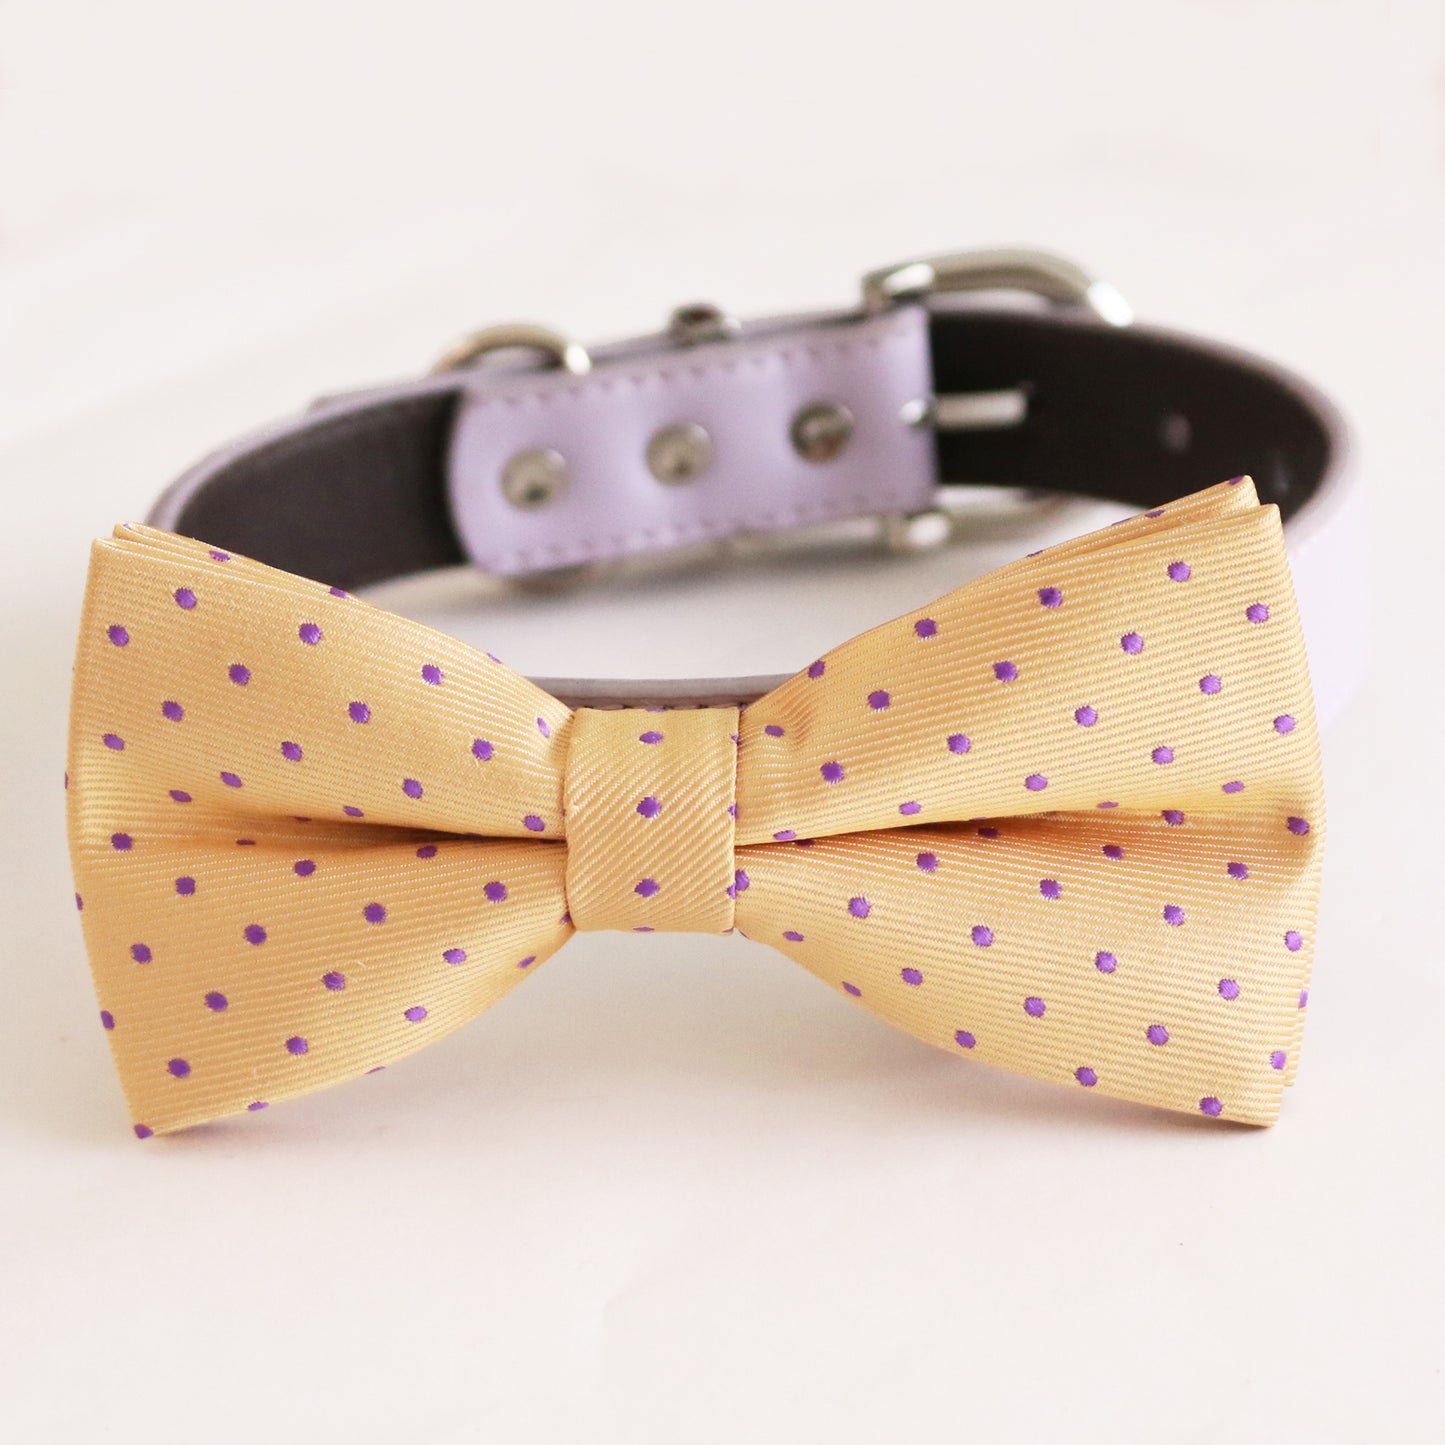 Cream bow tie collar Dog ring bearer dog ring bearer XS to XXL collar and bow tie, Puppy bow tie leather adjustable dog collar , Wedding dog collar